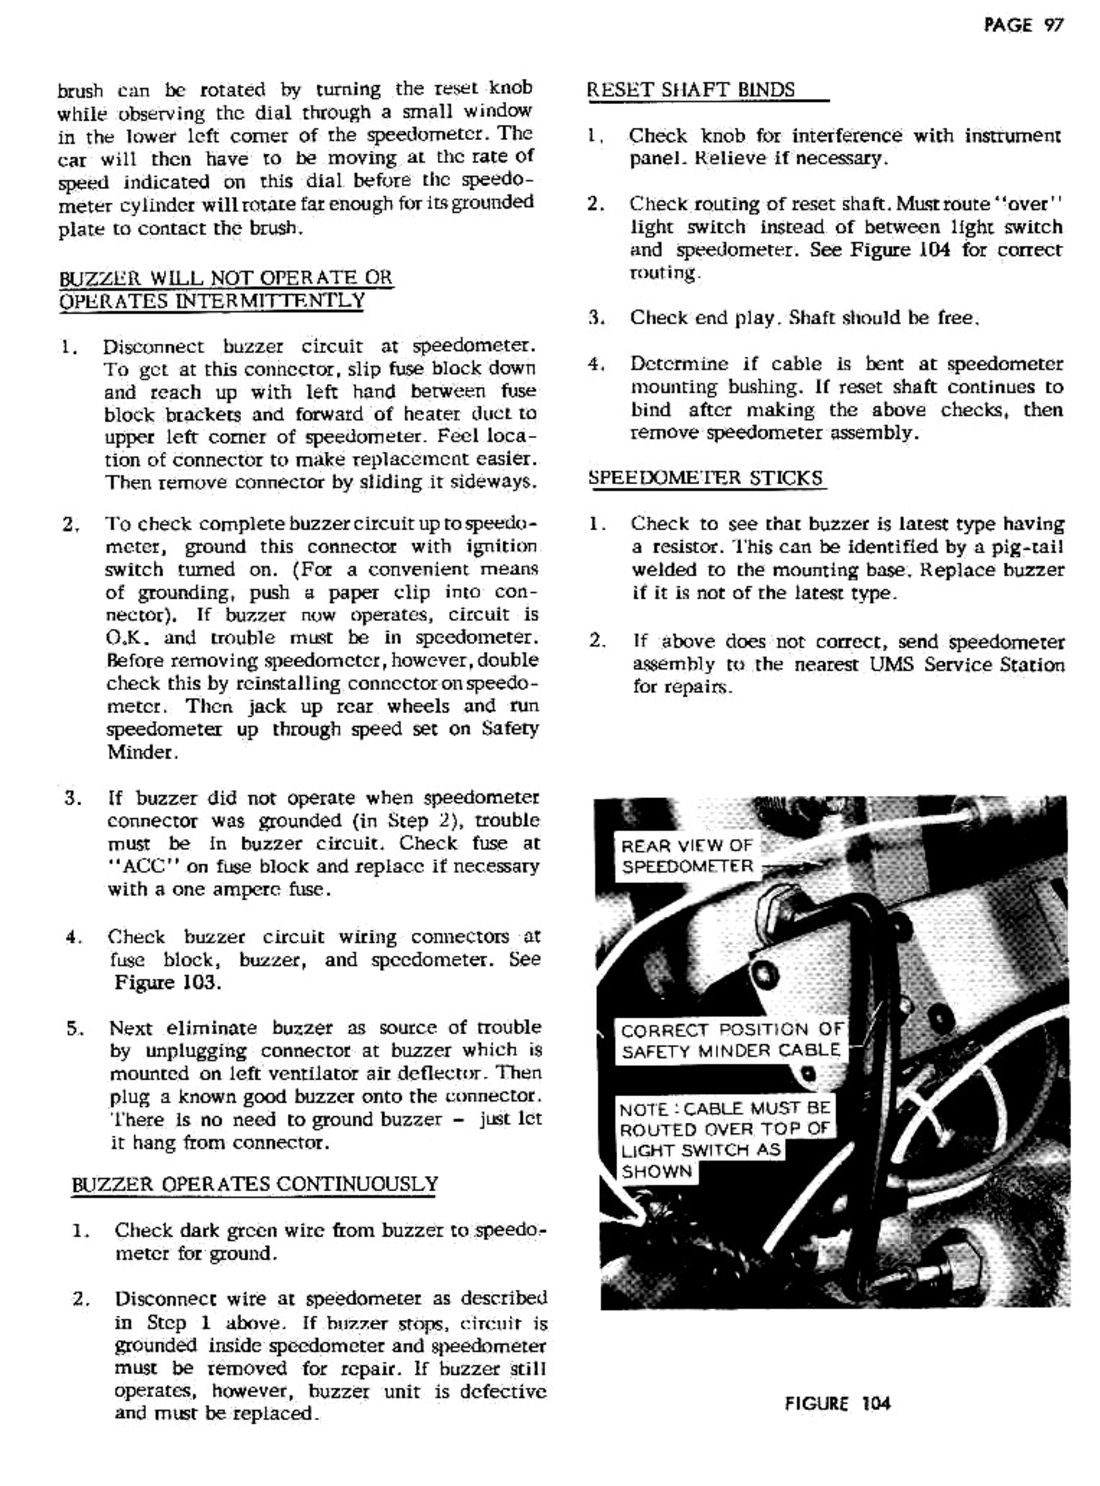 n_1957 Buick Product Service  Bulletins-101-101.jpg